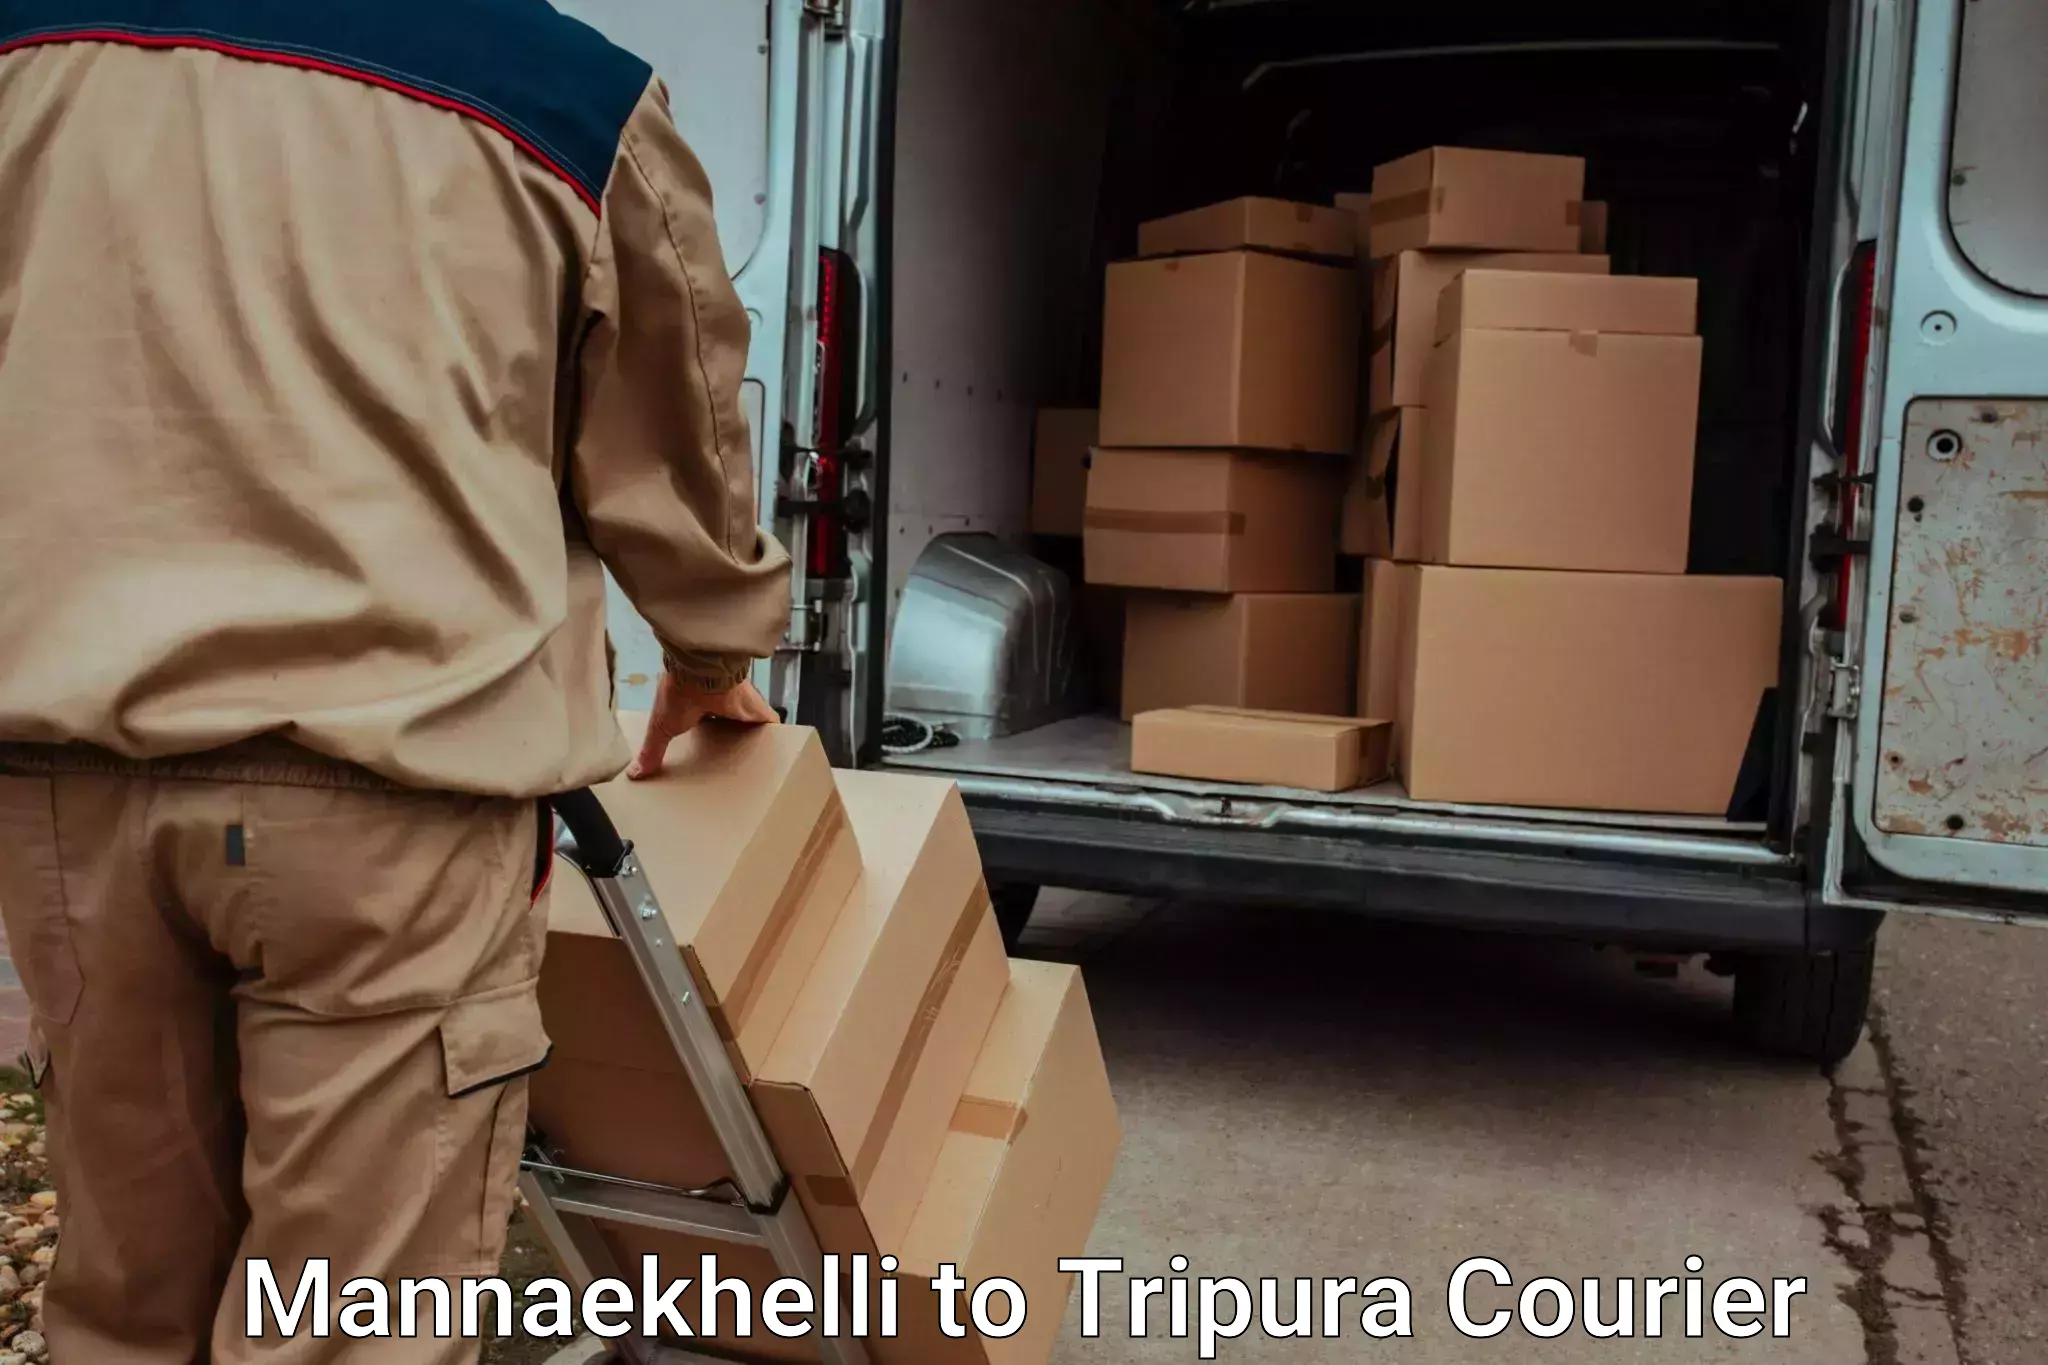 Efficient moving company in Mannaekhelli to Udaipur Tripura